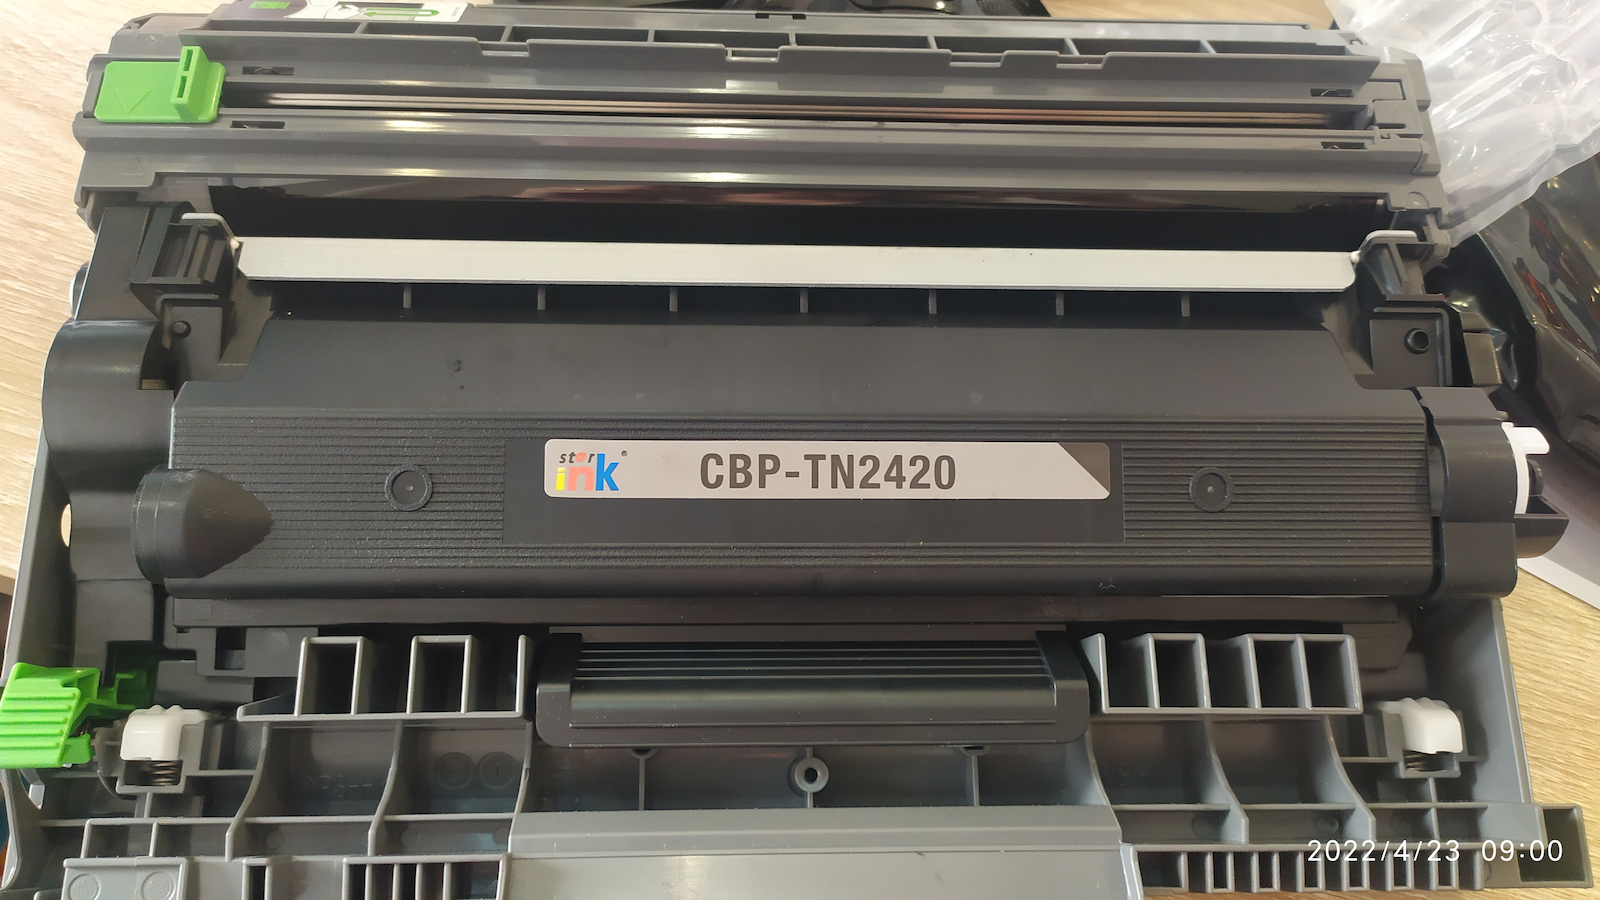 PSN Cartouche compatible laser noir Brother TN-2420, L1-BTTN2420